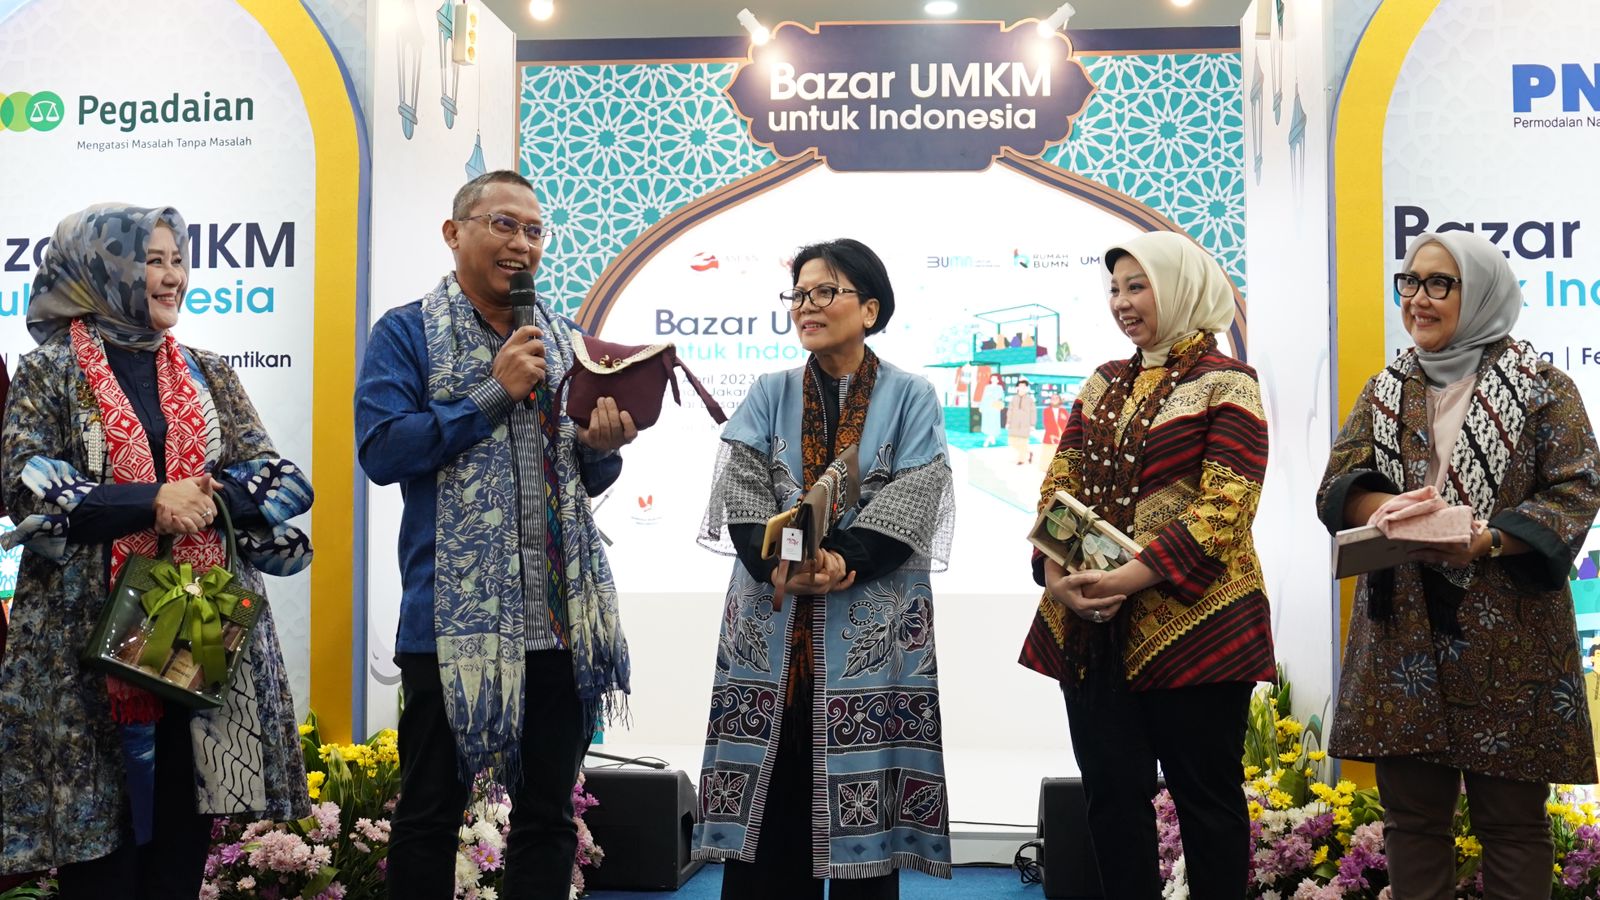 Pegadaian dan PNM Gelar Bazar agar UMKM Indonesia Naik Kelas